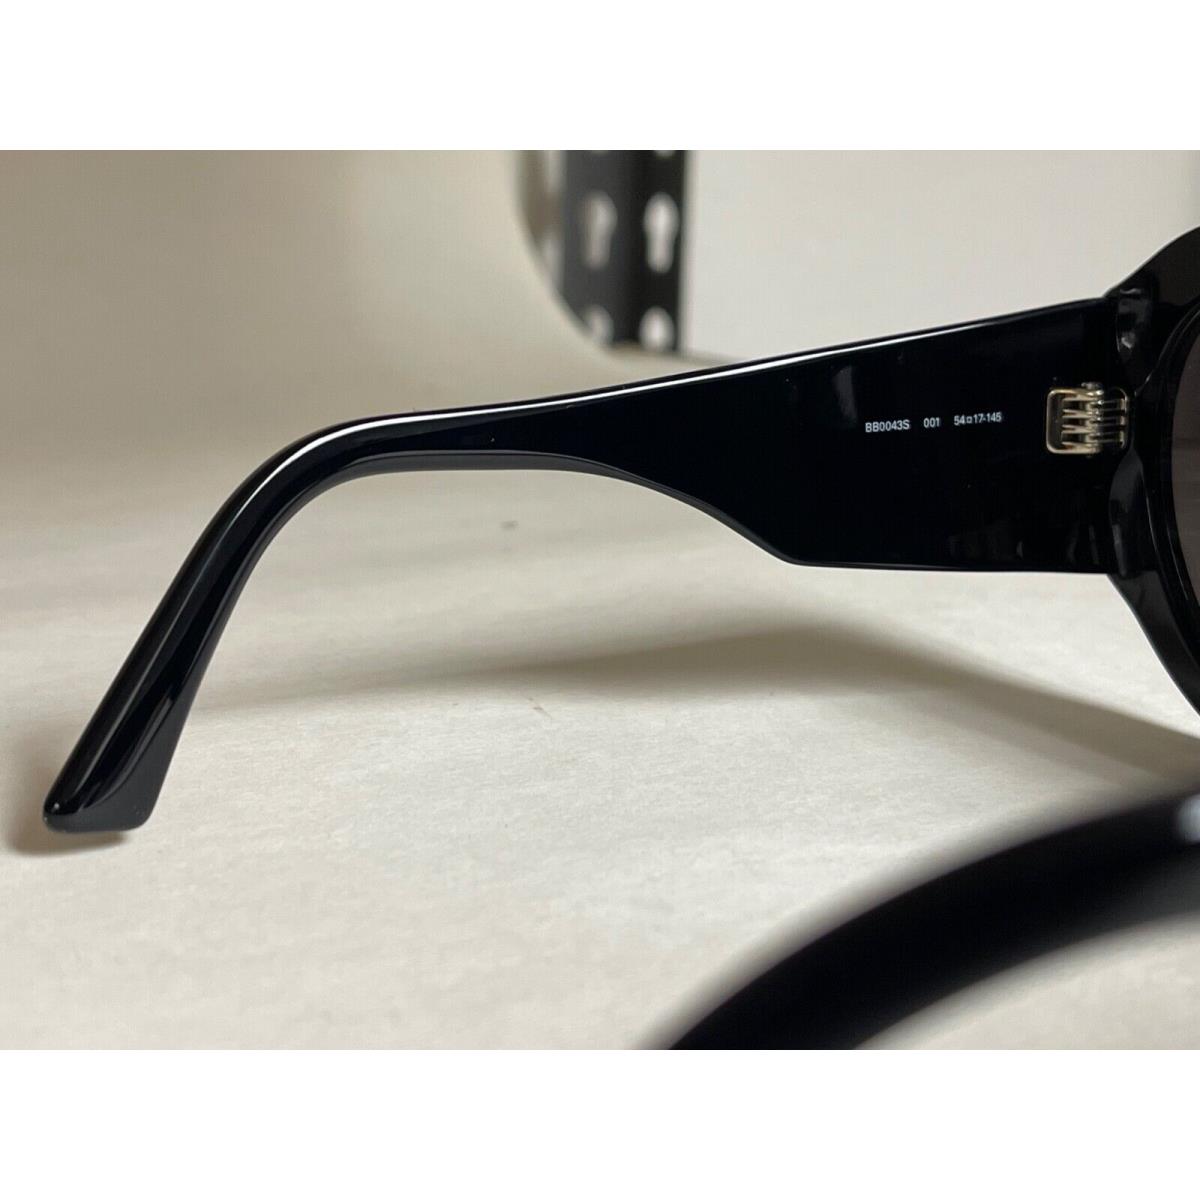 Balenciaga sunglasses  - 001 , Black Frame, Gray Lens